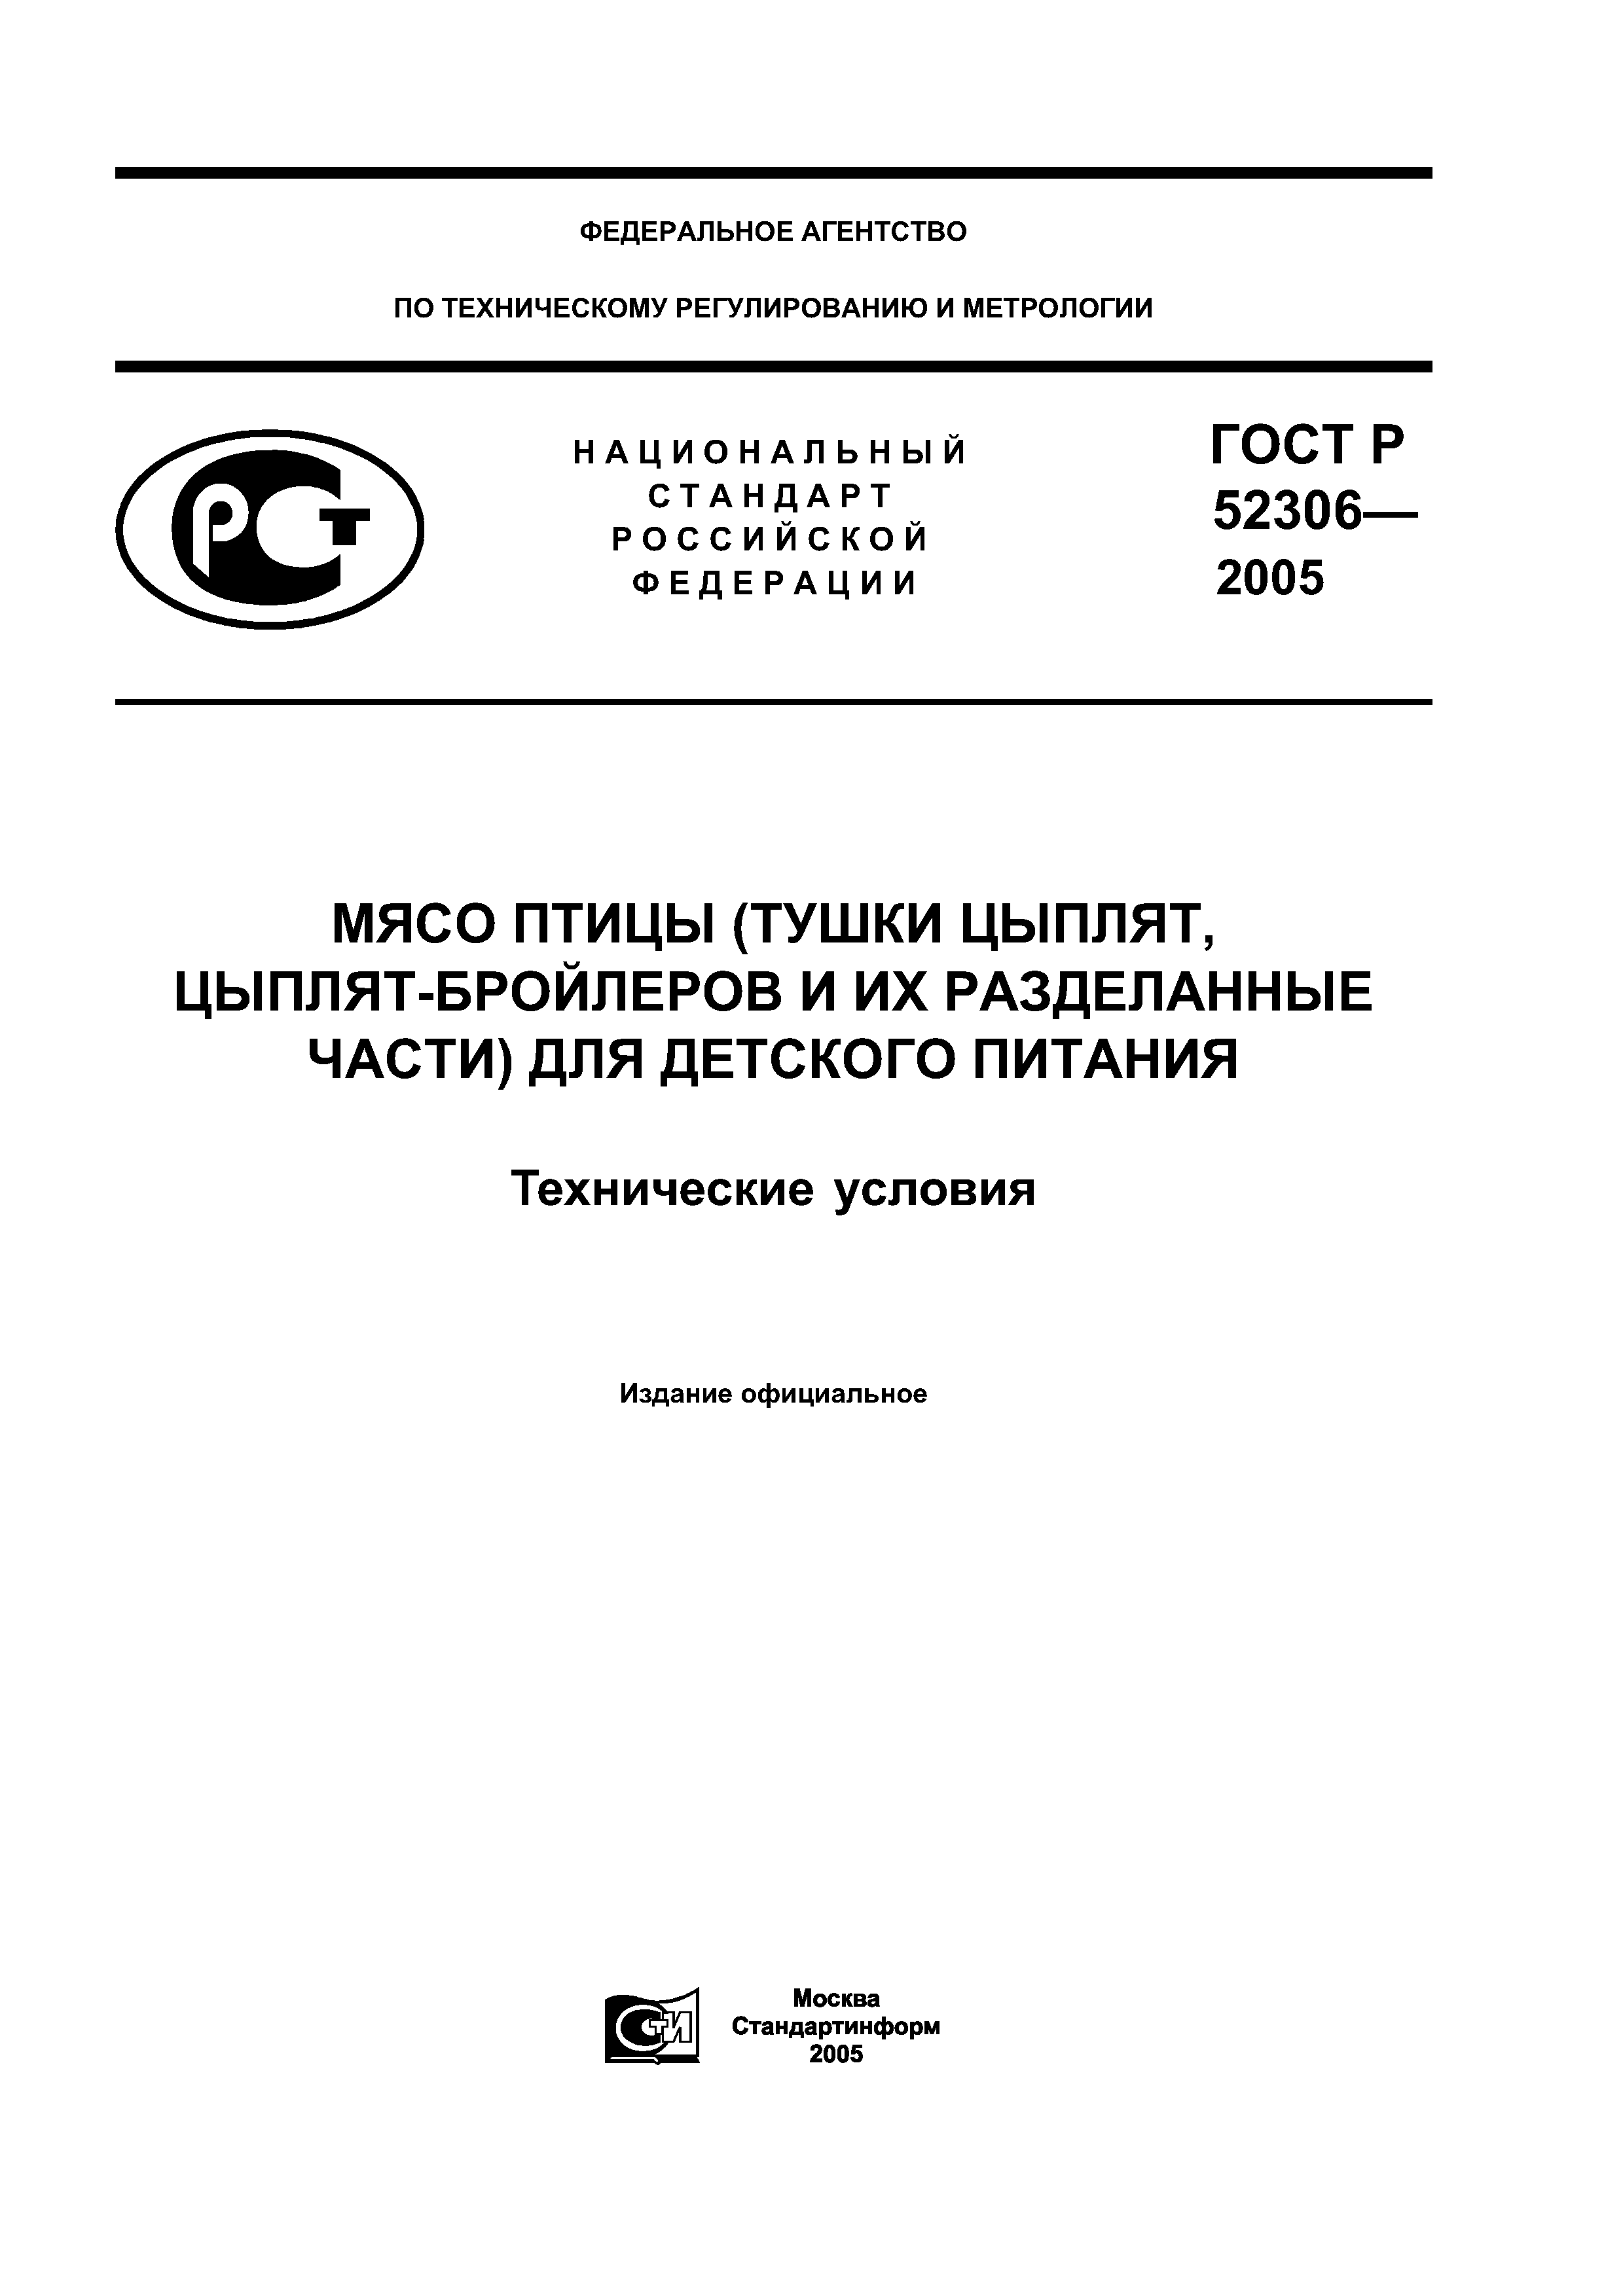 ГОСТ 52306-2005